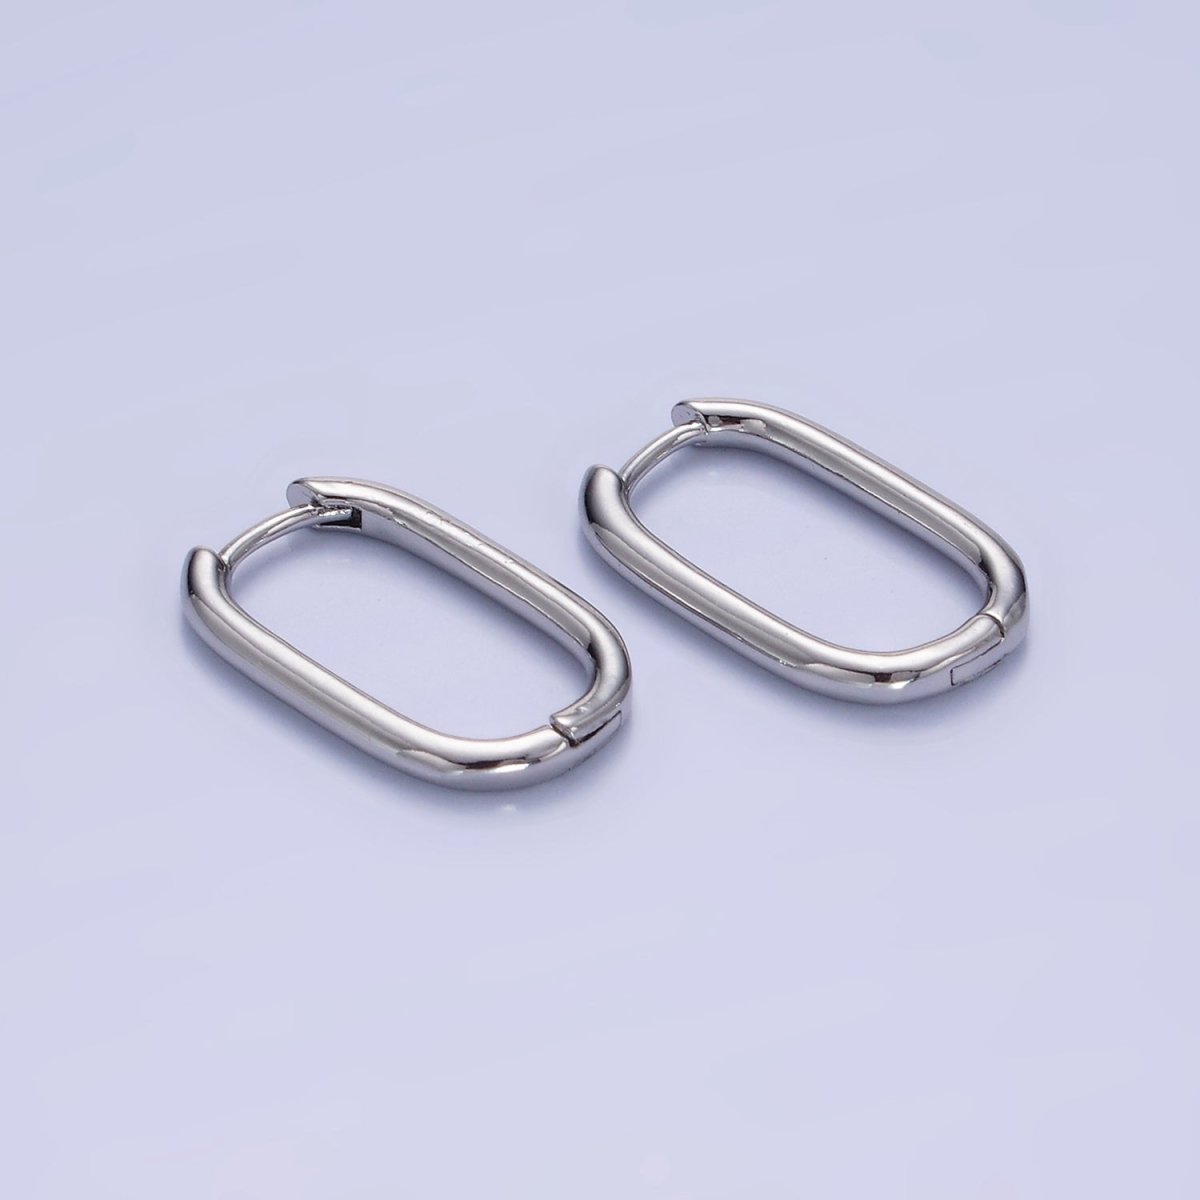 Dainty Link Hoop Earrings Minimalist Oblong Gold Filled Hoop Earring AB-1336 AB-1337 - DLUXCA